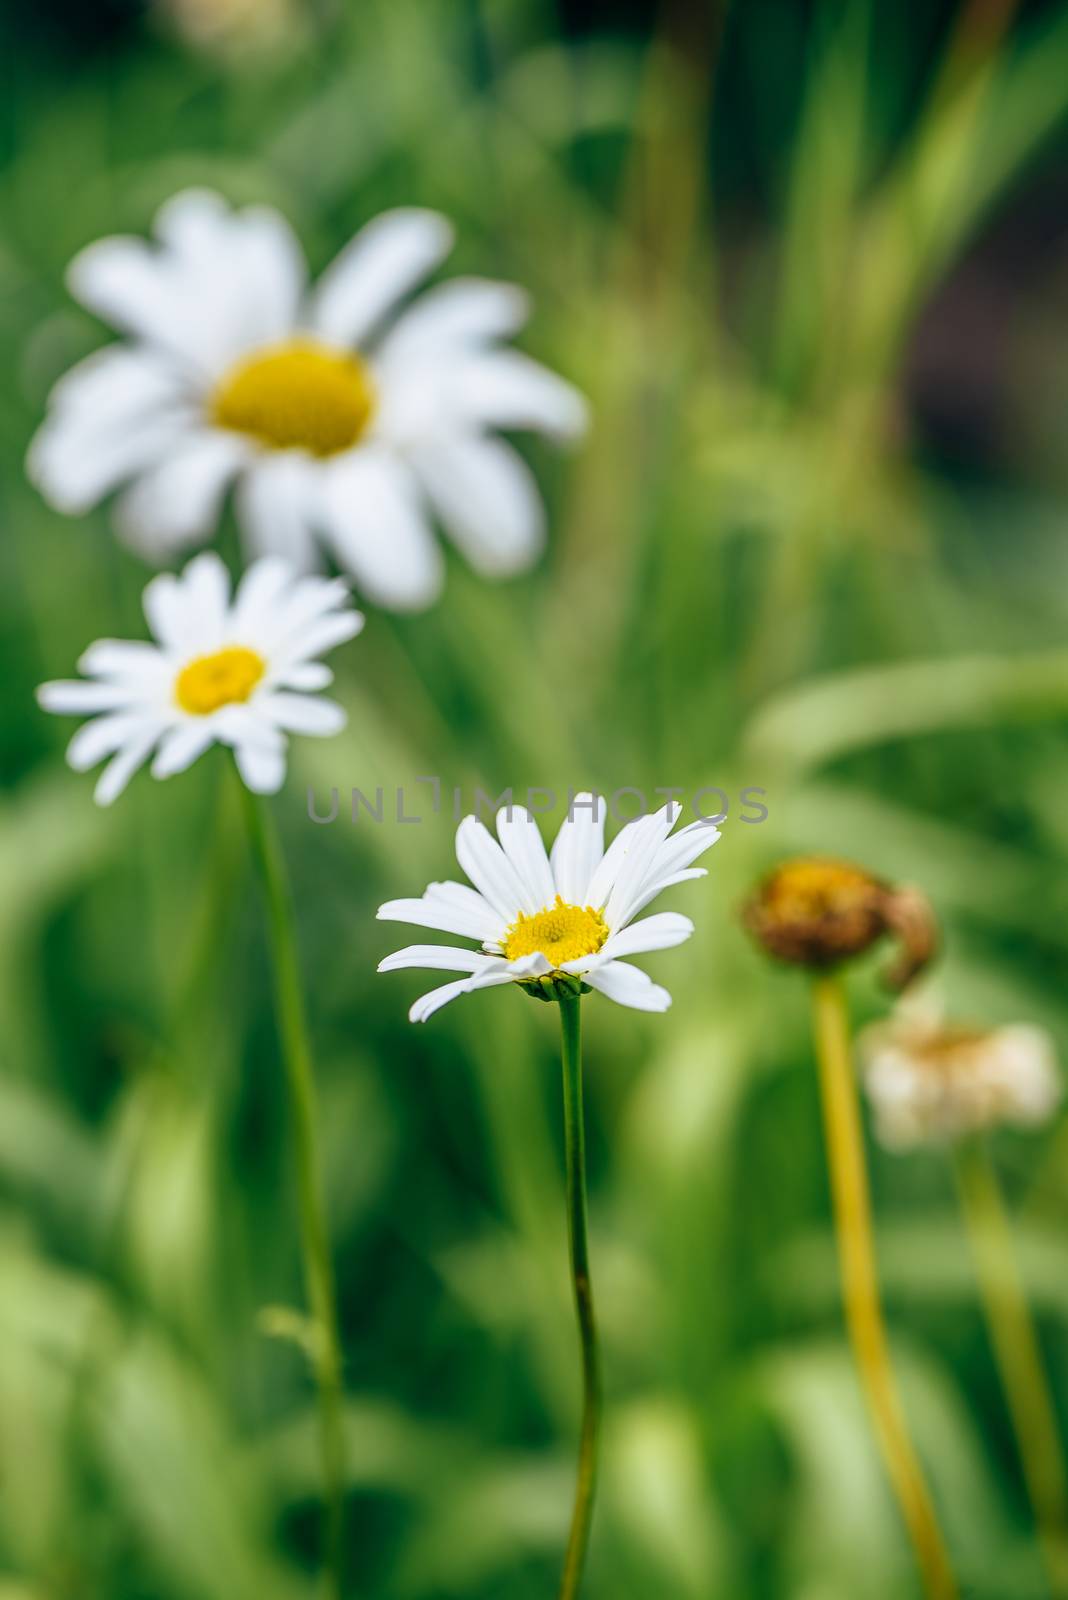 Meadow Daisy Flower at Sunny Day. by Seva_blsv